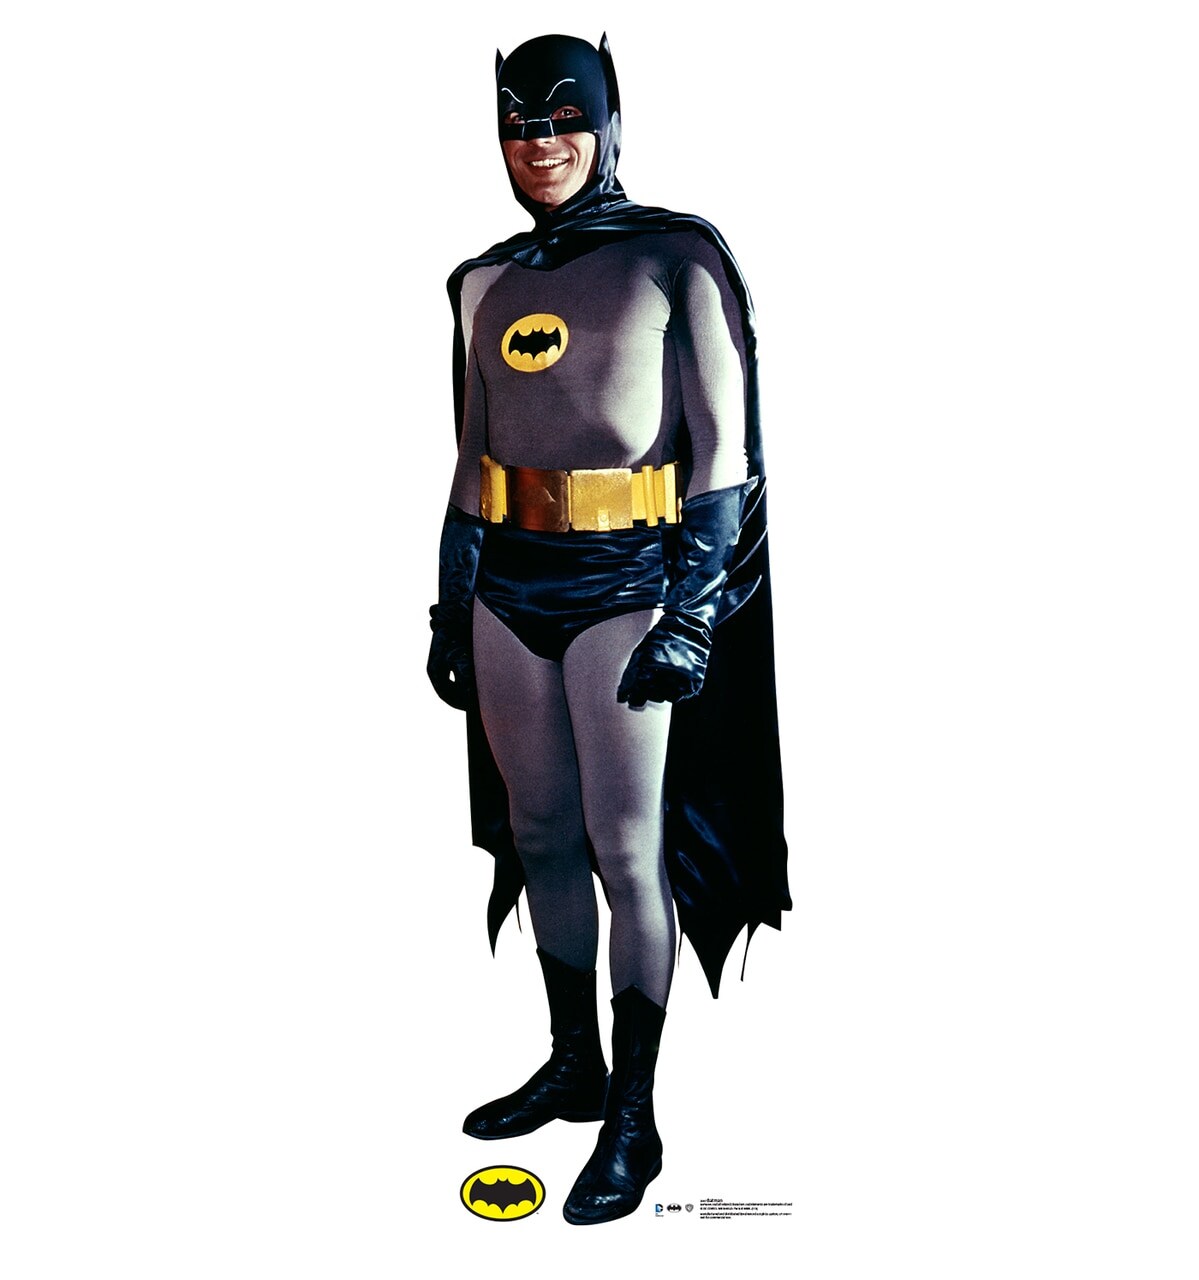 Batman (1969 TV Series - Batman and Robin)